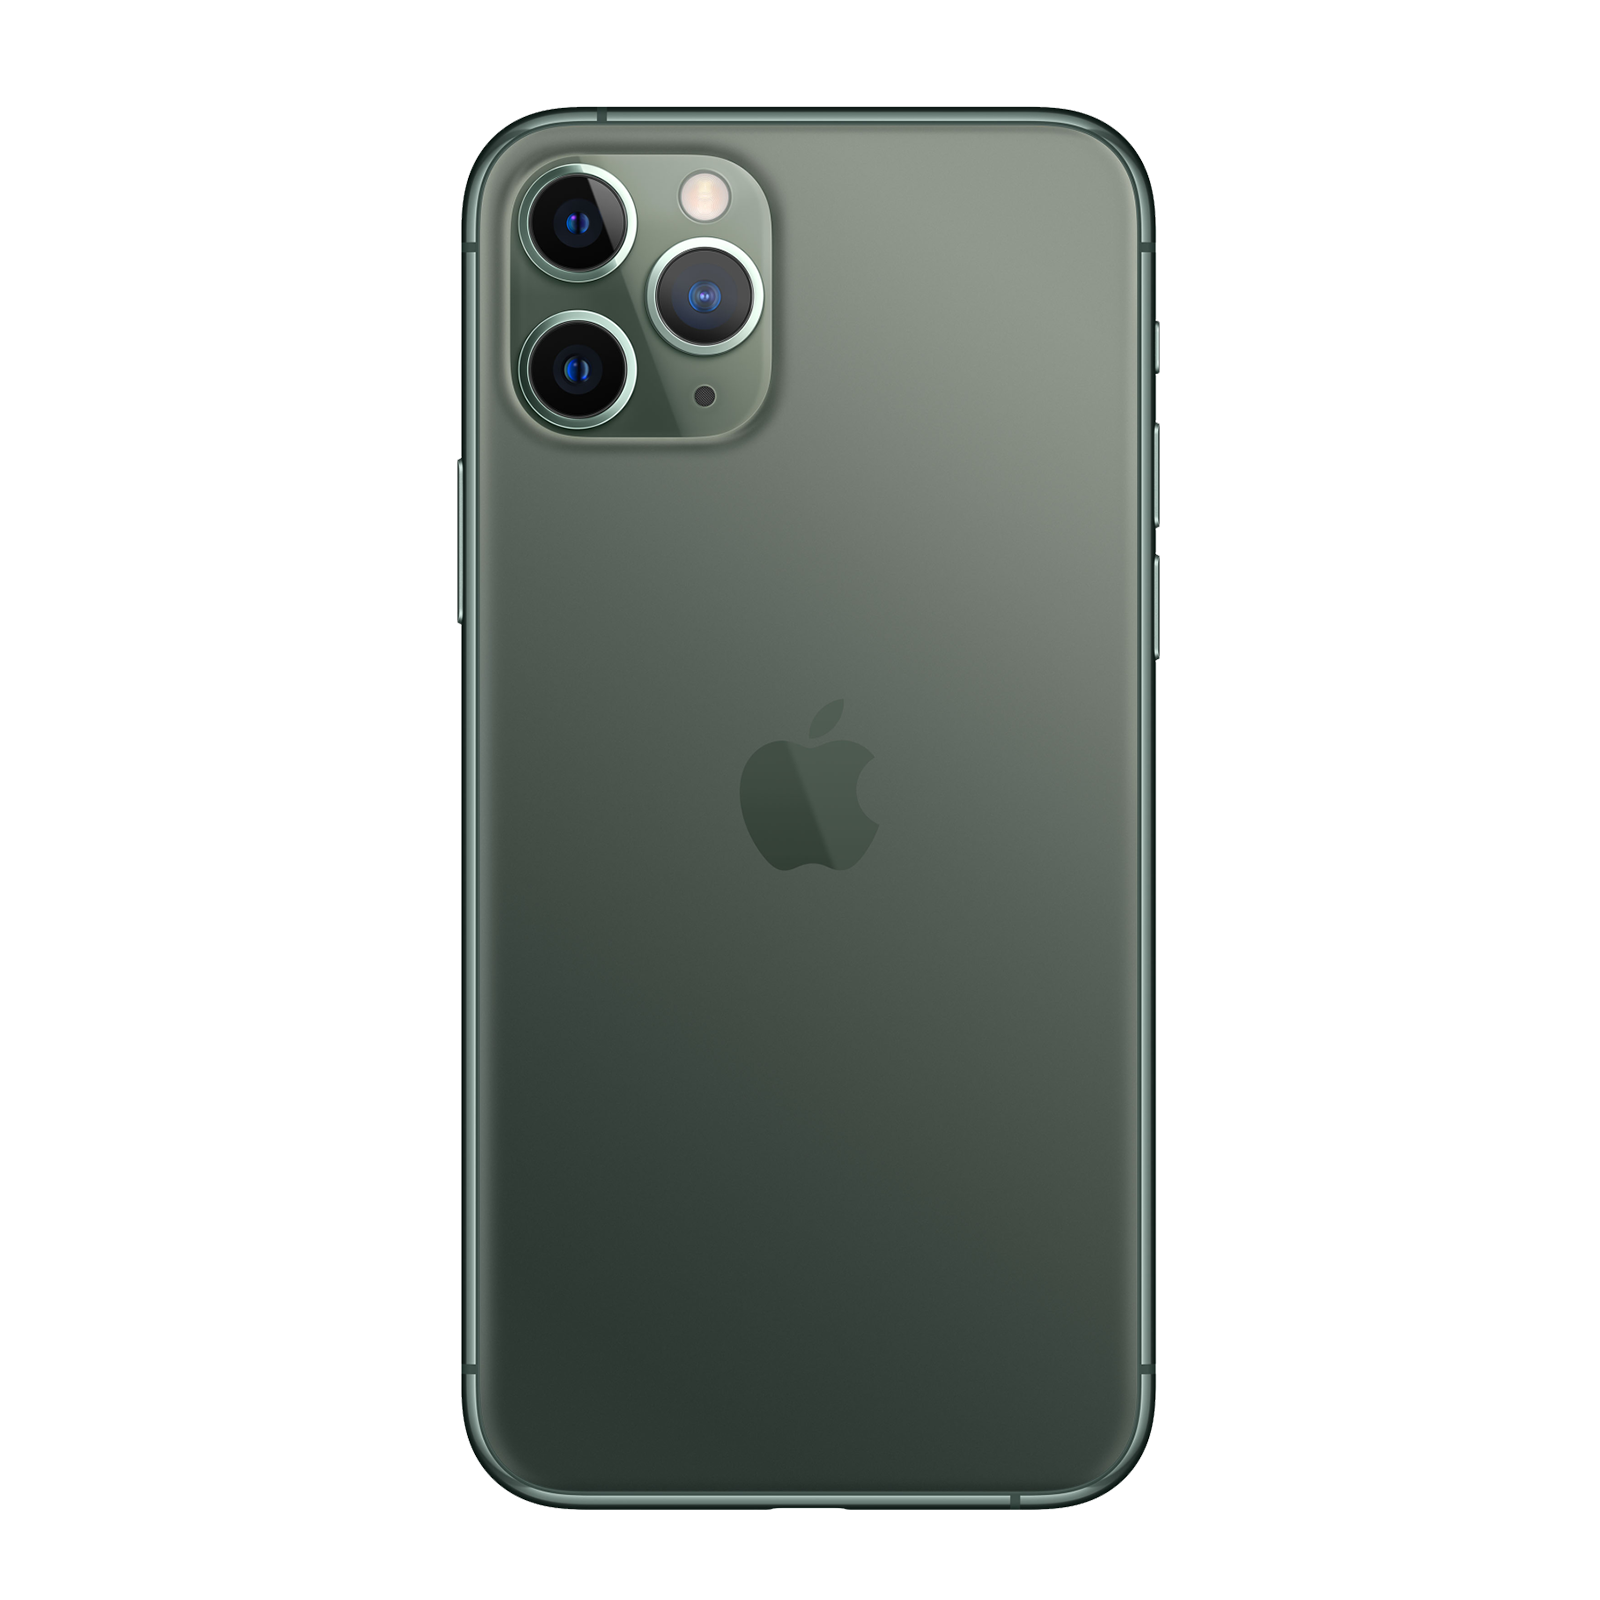 Apple iPhone 11 Pro 64GB Nachtgrün Sehr Gut - Ohne Vertrag